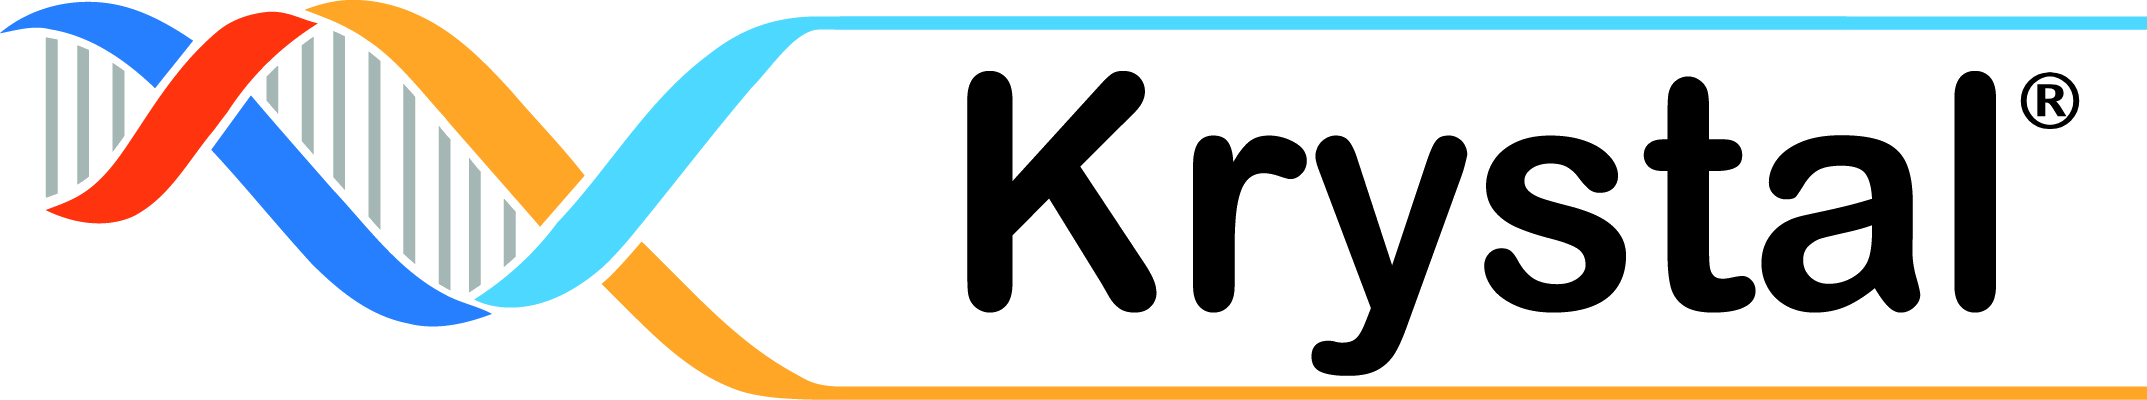 KRYS+logo+no_background+with+registered+symbol+.png